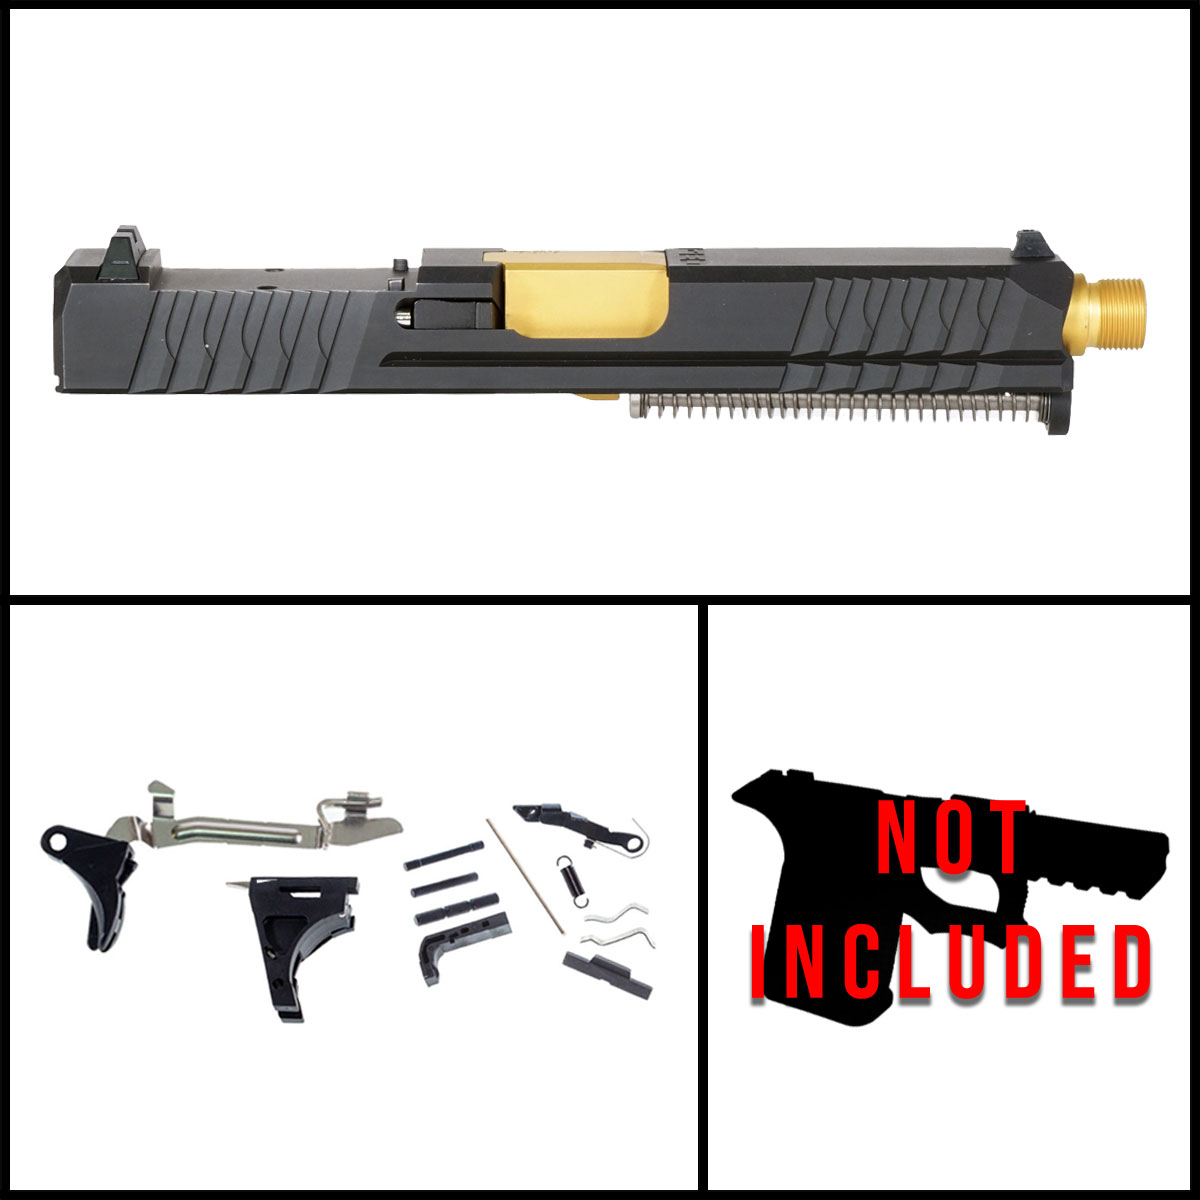 DTT 'Suffrage' 9mm Full Gun Kit - Glock 19 Gen 1-3 Compatible